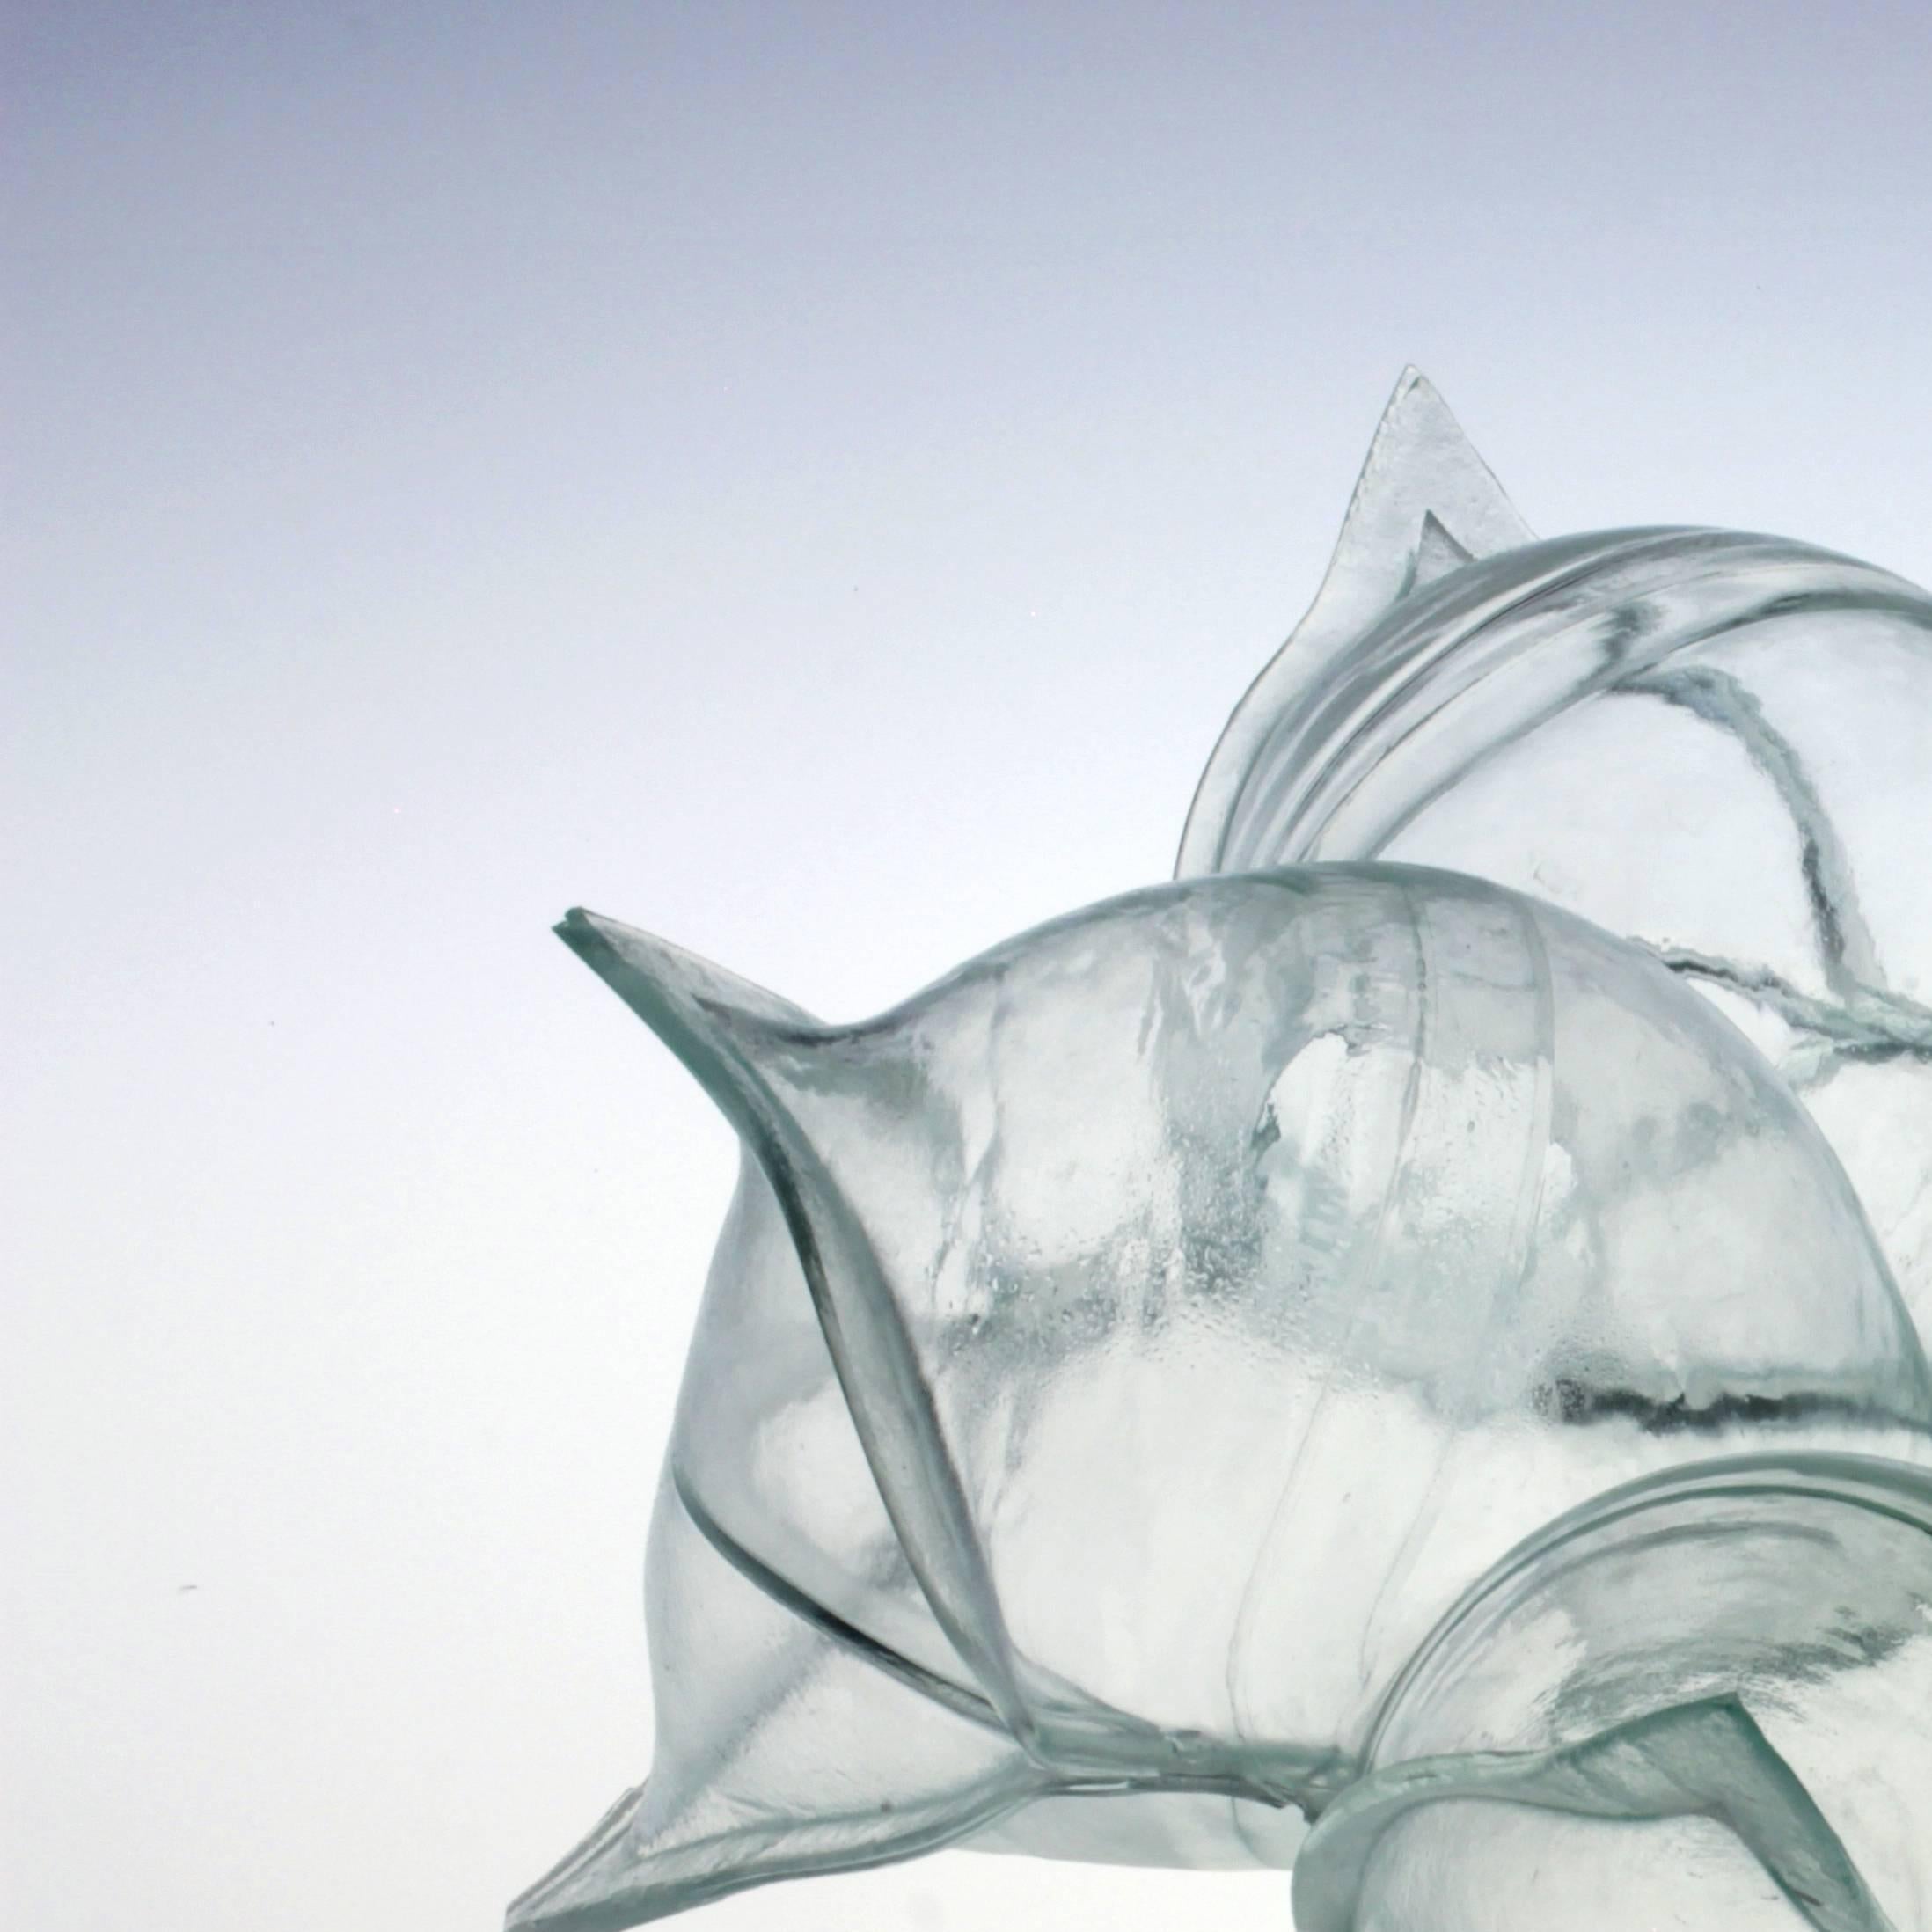  Matthew Szösz, untitled (inflatable) no. 80, 2018, glass - Sculpture by Matthew Szosz